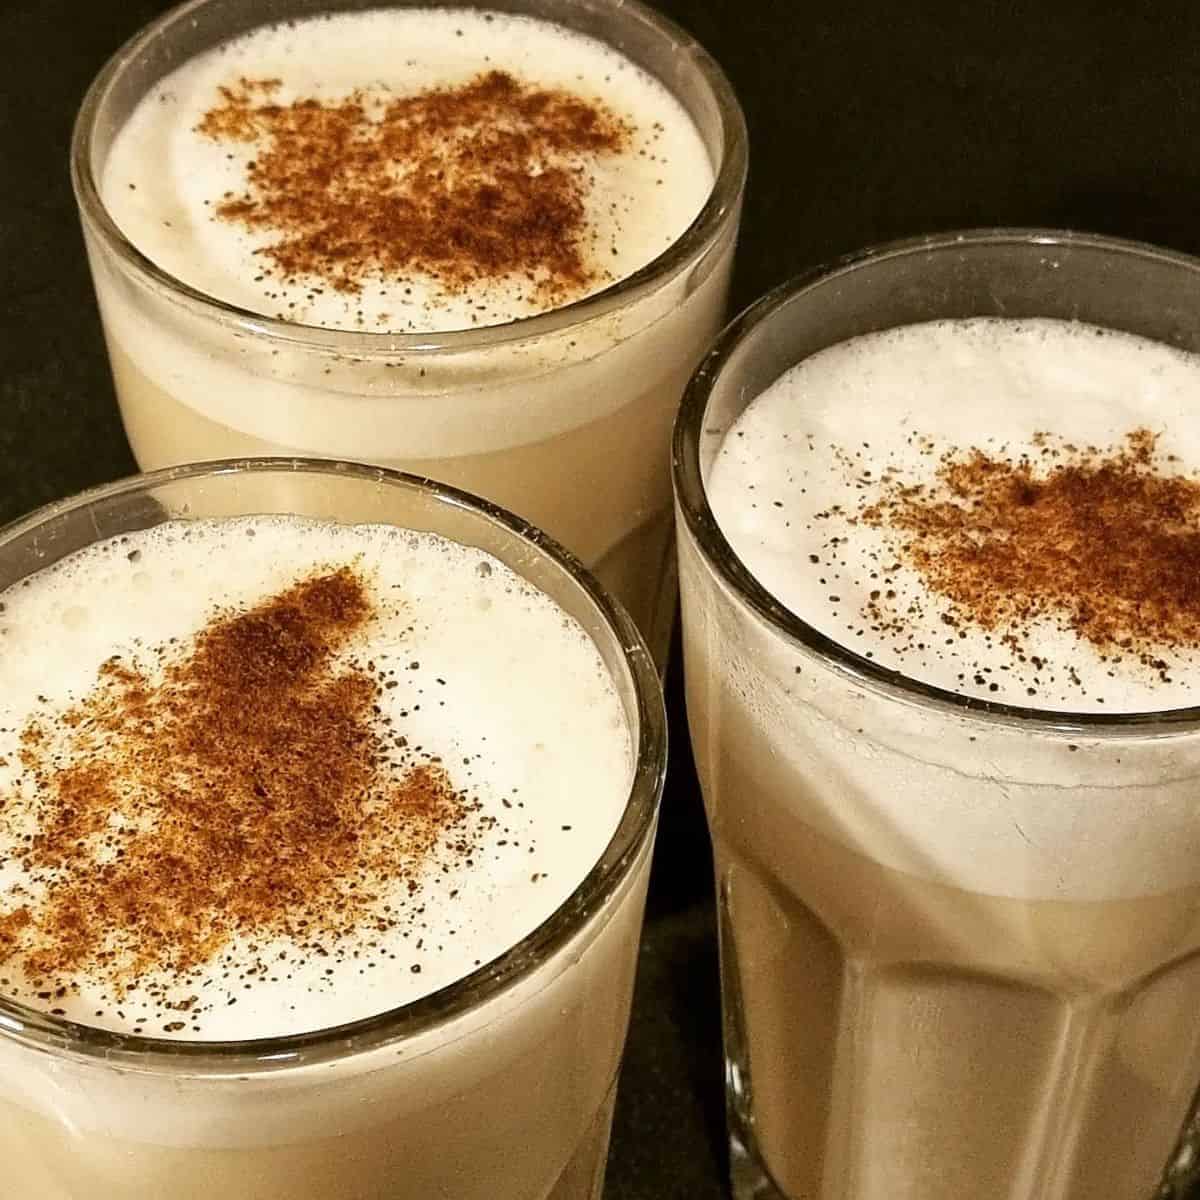 Three servings of luscious latte in transparent glasses